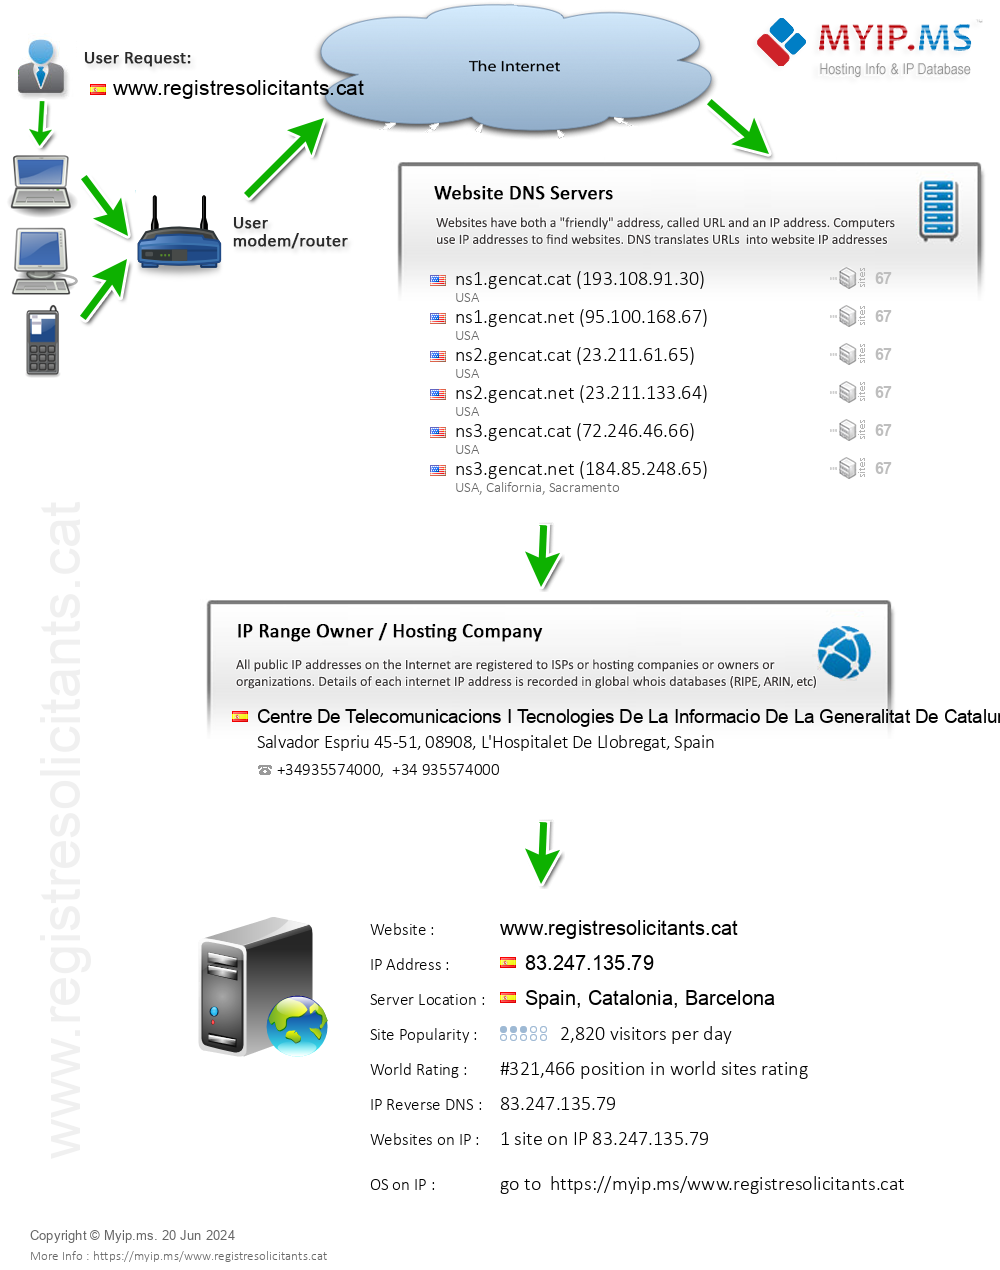 Registresolicitants.cat - Website Hosting Visual IP Diagram